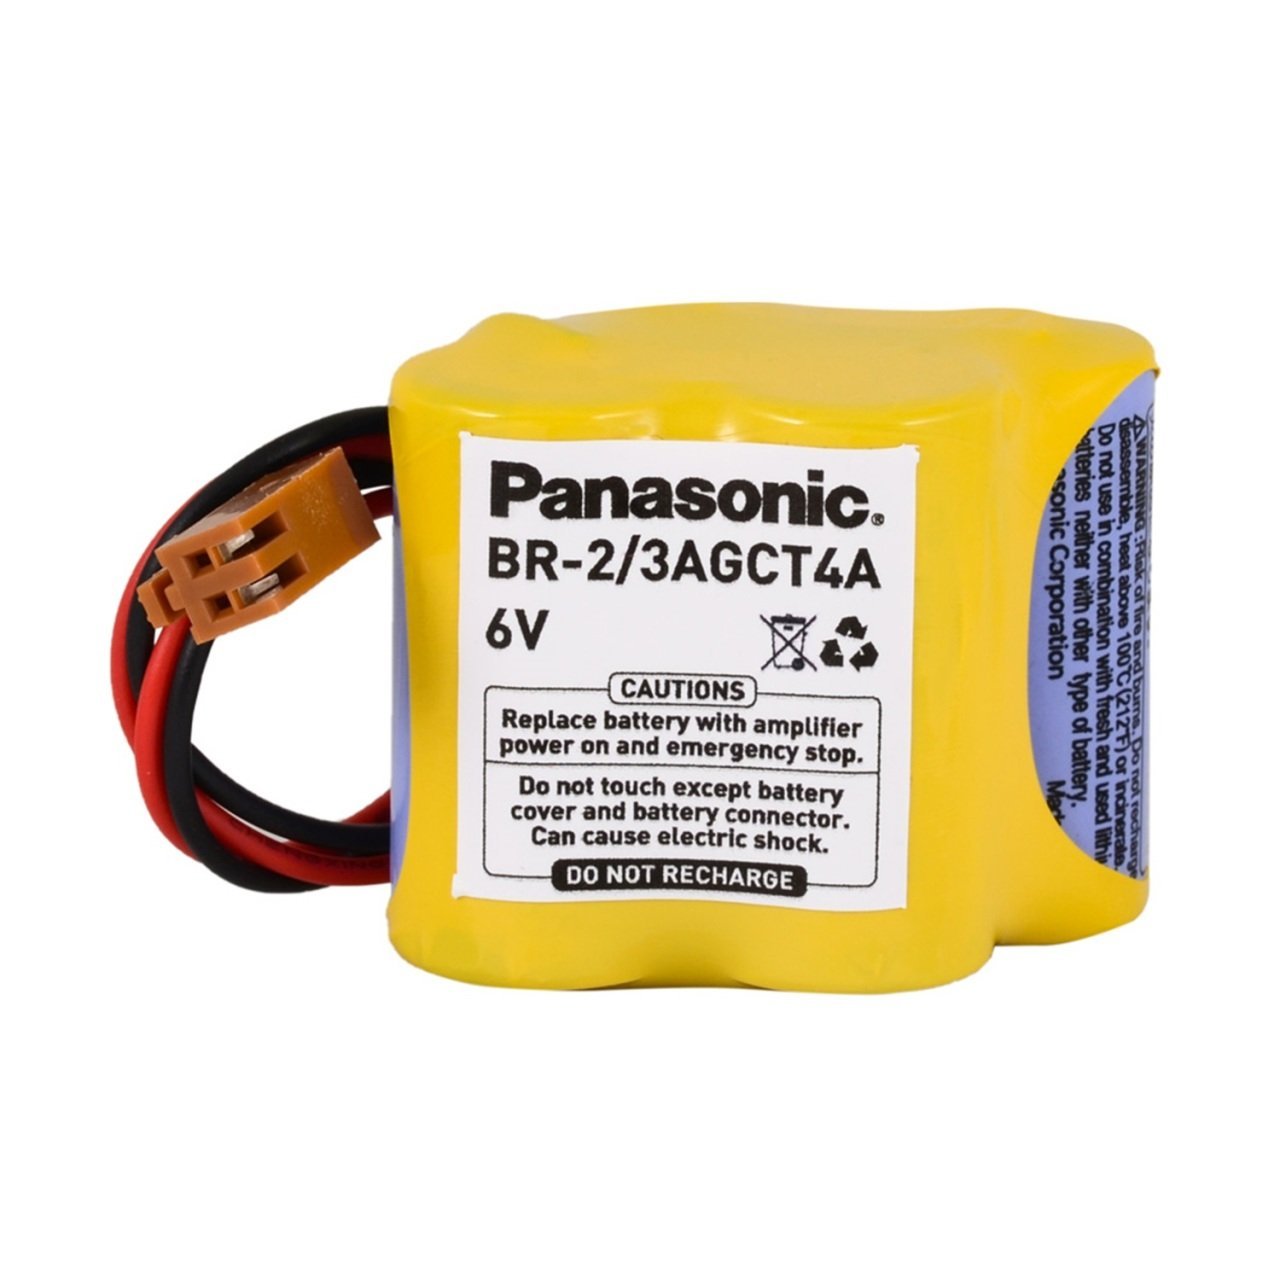 Panasonic BR-2/3AGCT4A 6V Lityum Pil